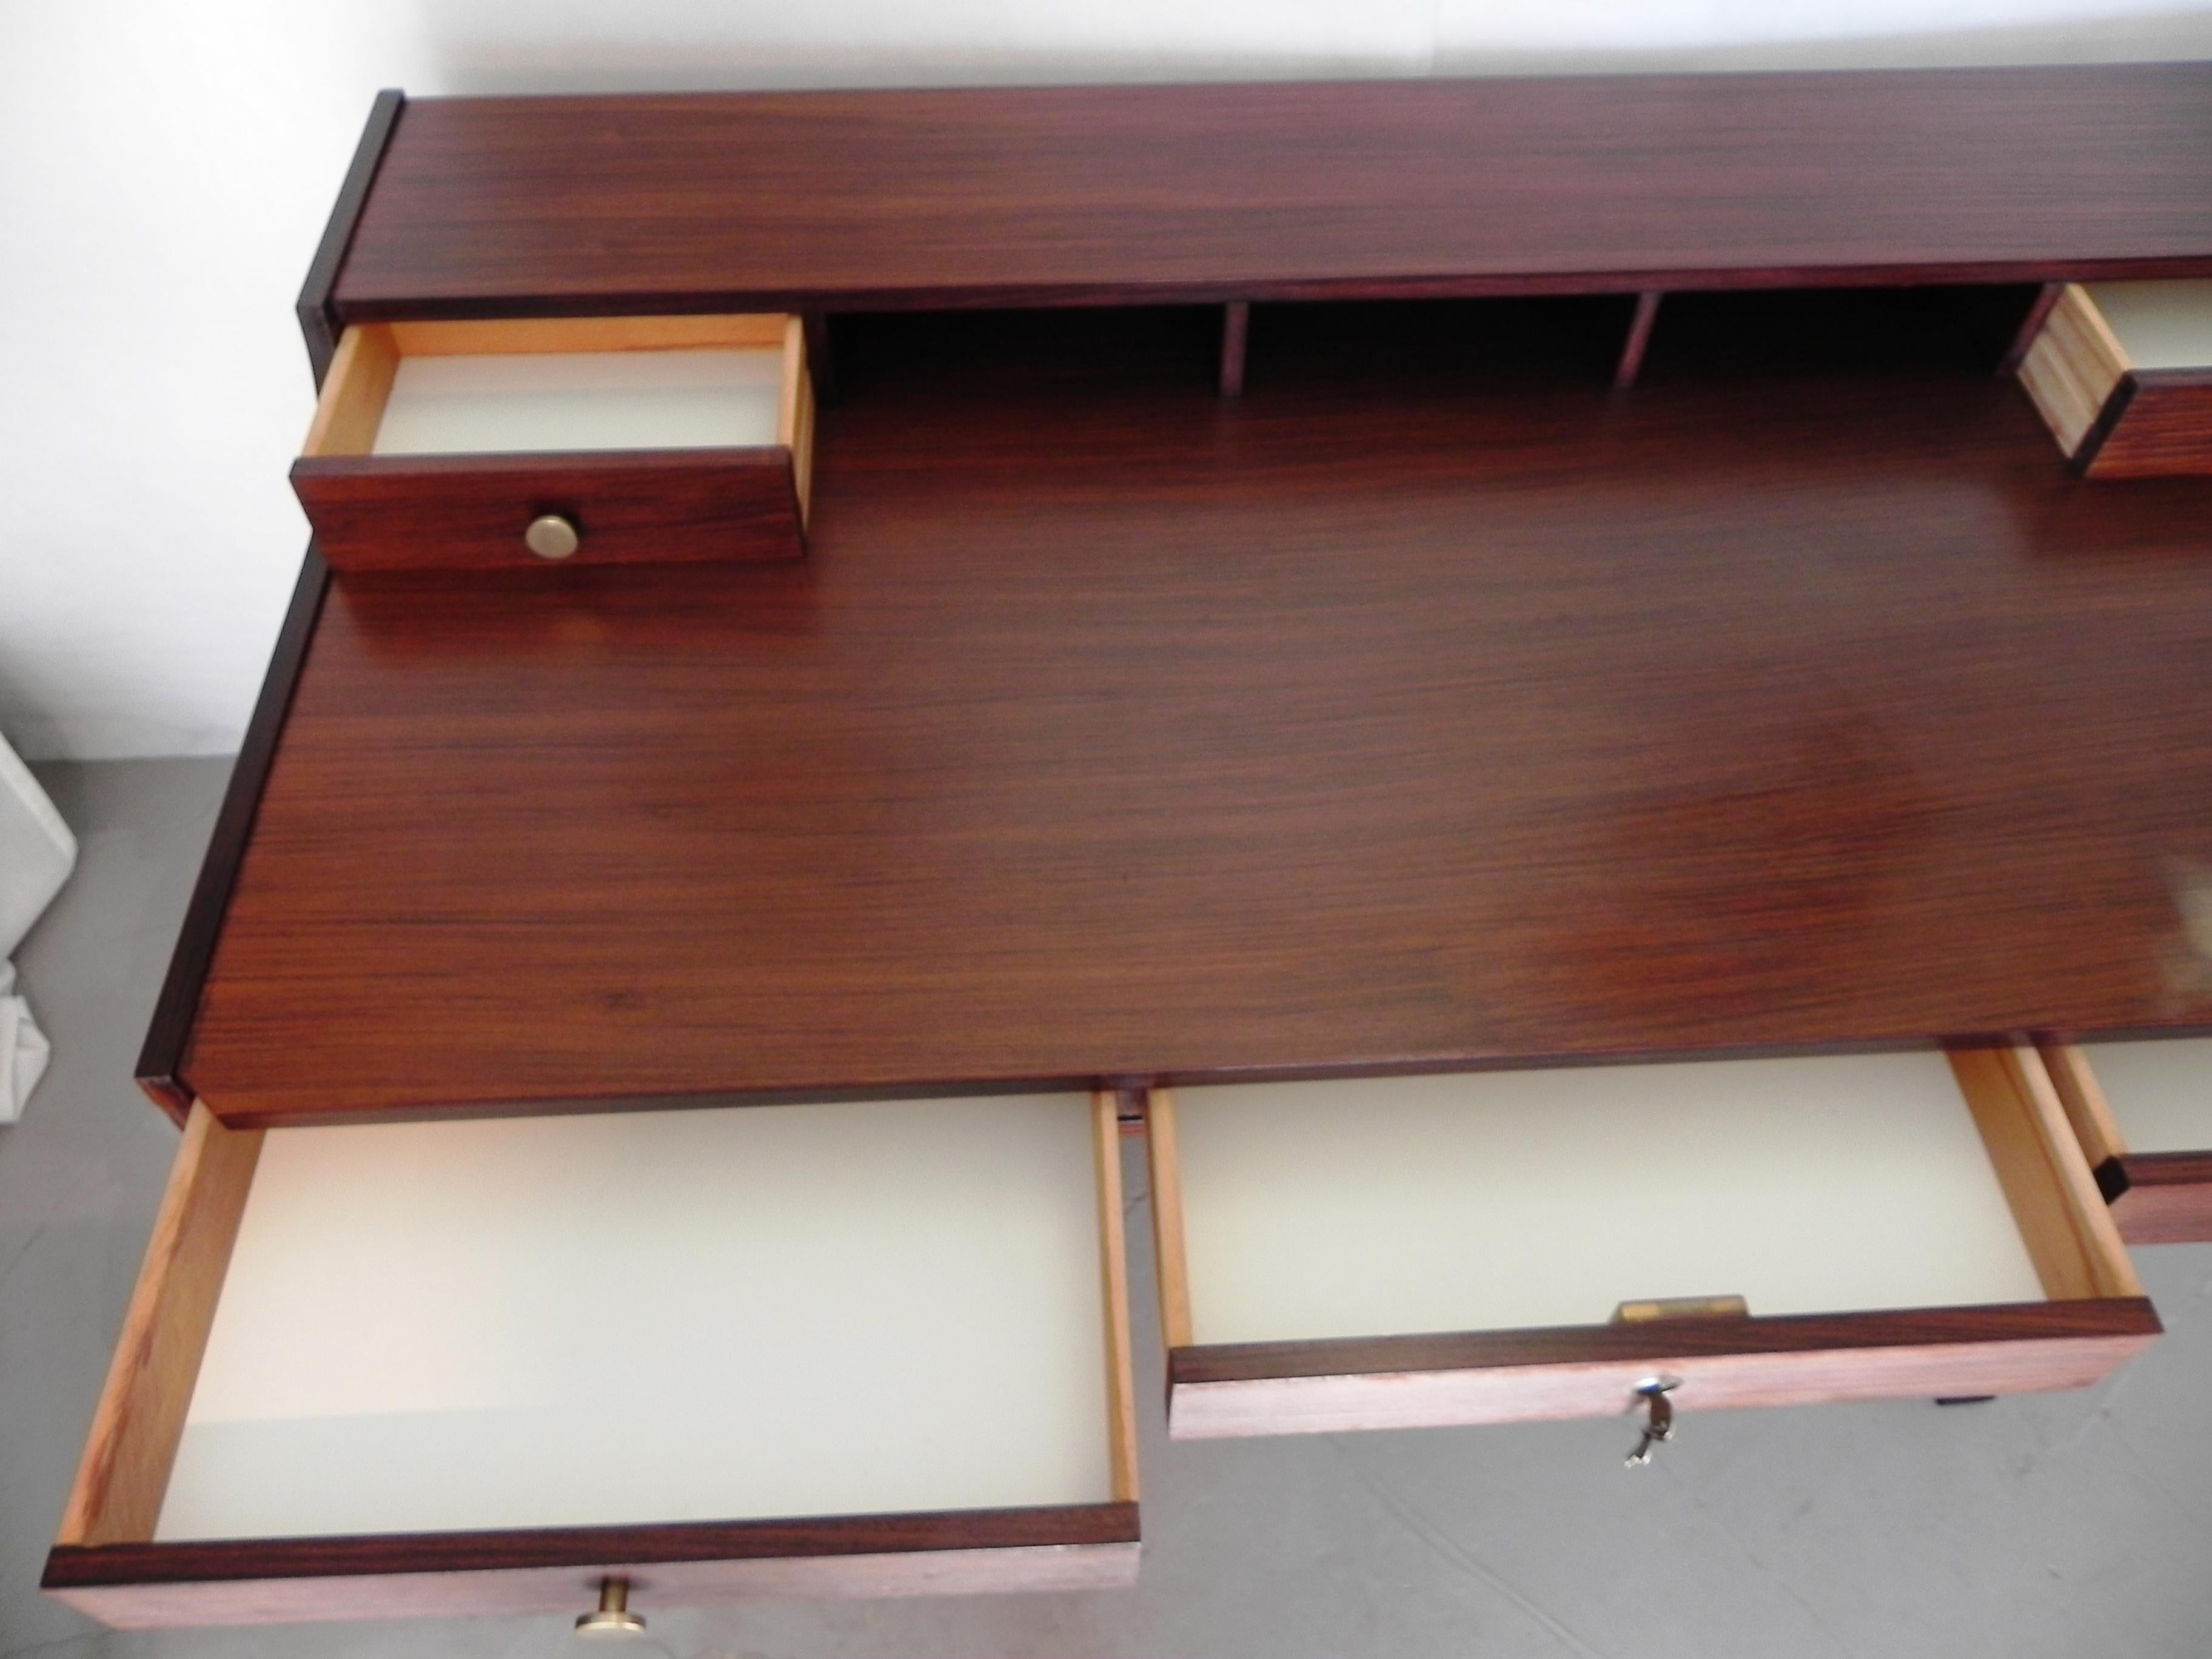 60s desk, Frattini style In Good Condition For Sale In Felino, IT